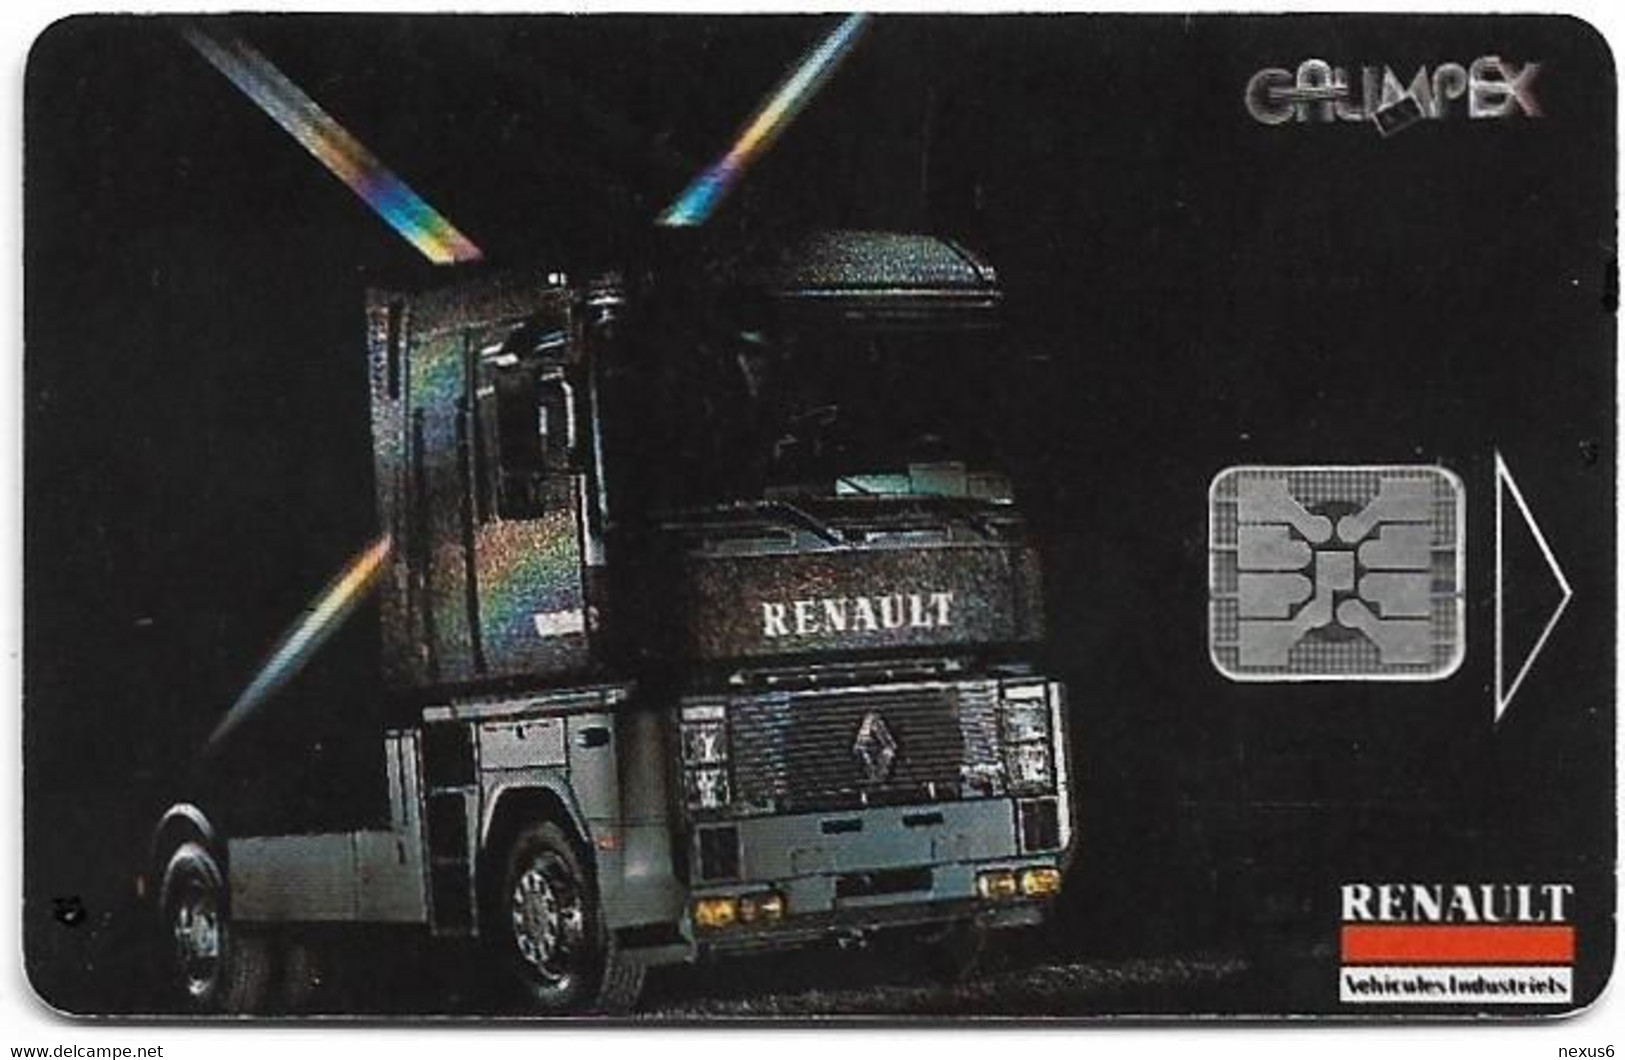 Czechoslovakia - CSFR - Renault Truck, Galimpex - 1992, SC4, Cn.44007 Inverted, 150U, 50.000ex, Used - Tchécoslovaquie